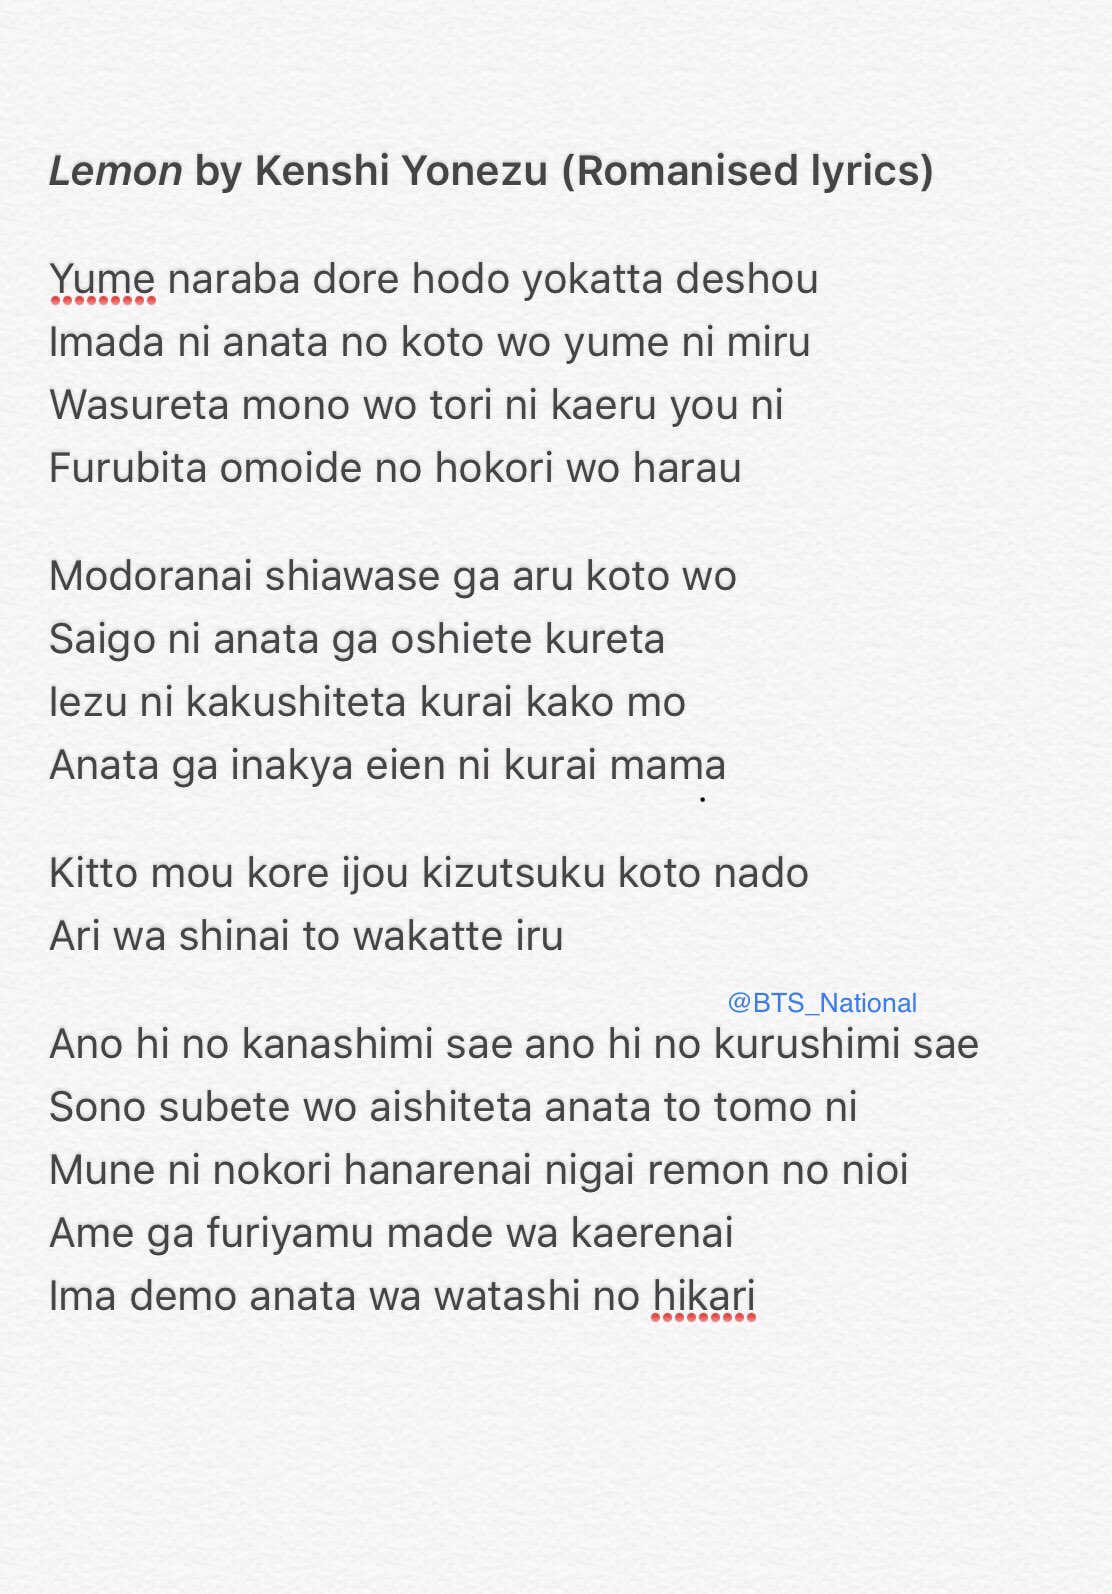 Watashi Wa Lyrics 